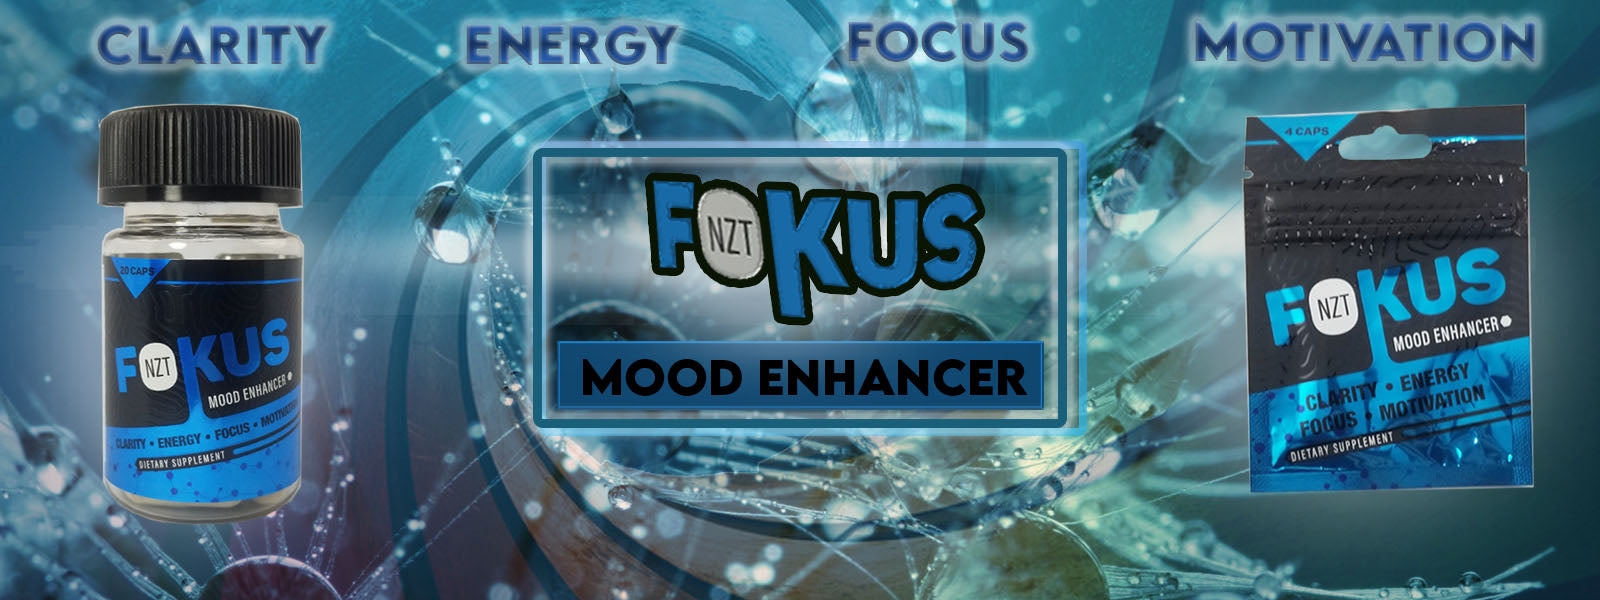 Fokus NZT Mood Enhancer